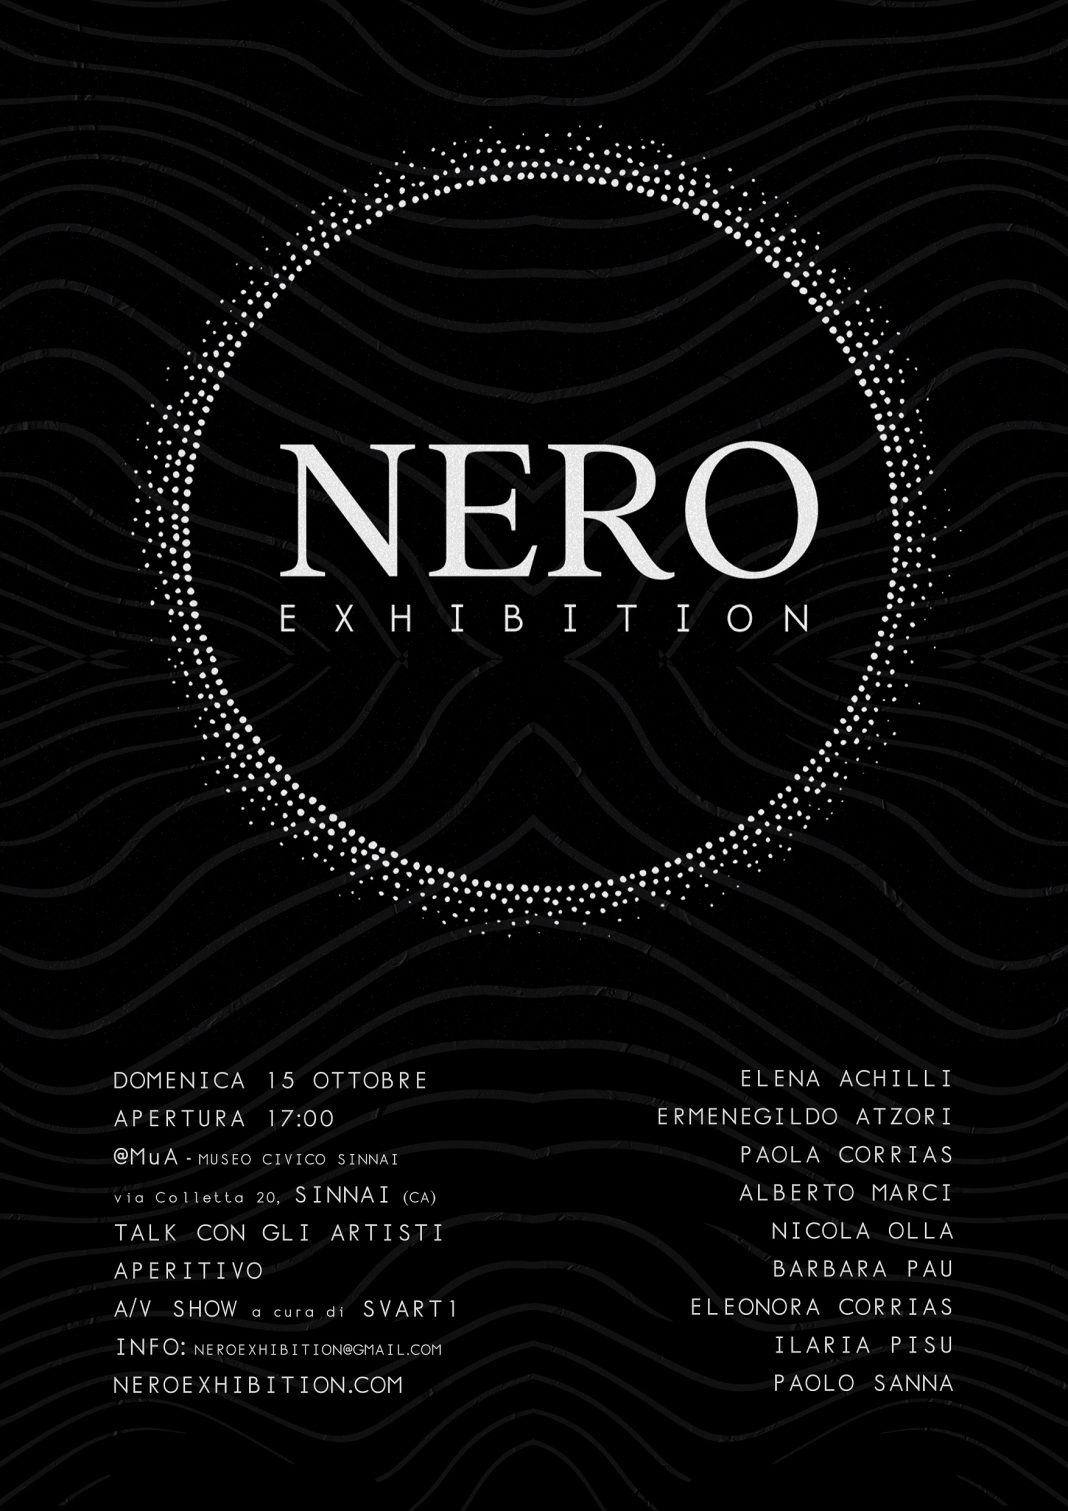 NERO exhibitionhttps://www.exibart.com/repository/media/formidable/11/img/0fe/NERO_Flyer-A3_-1068x1511.jpg